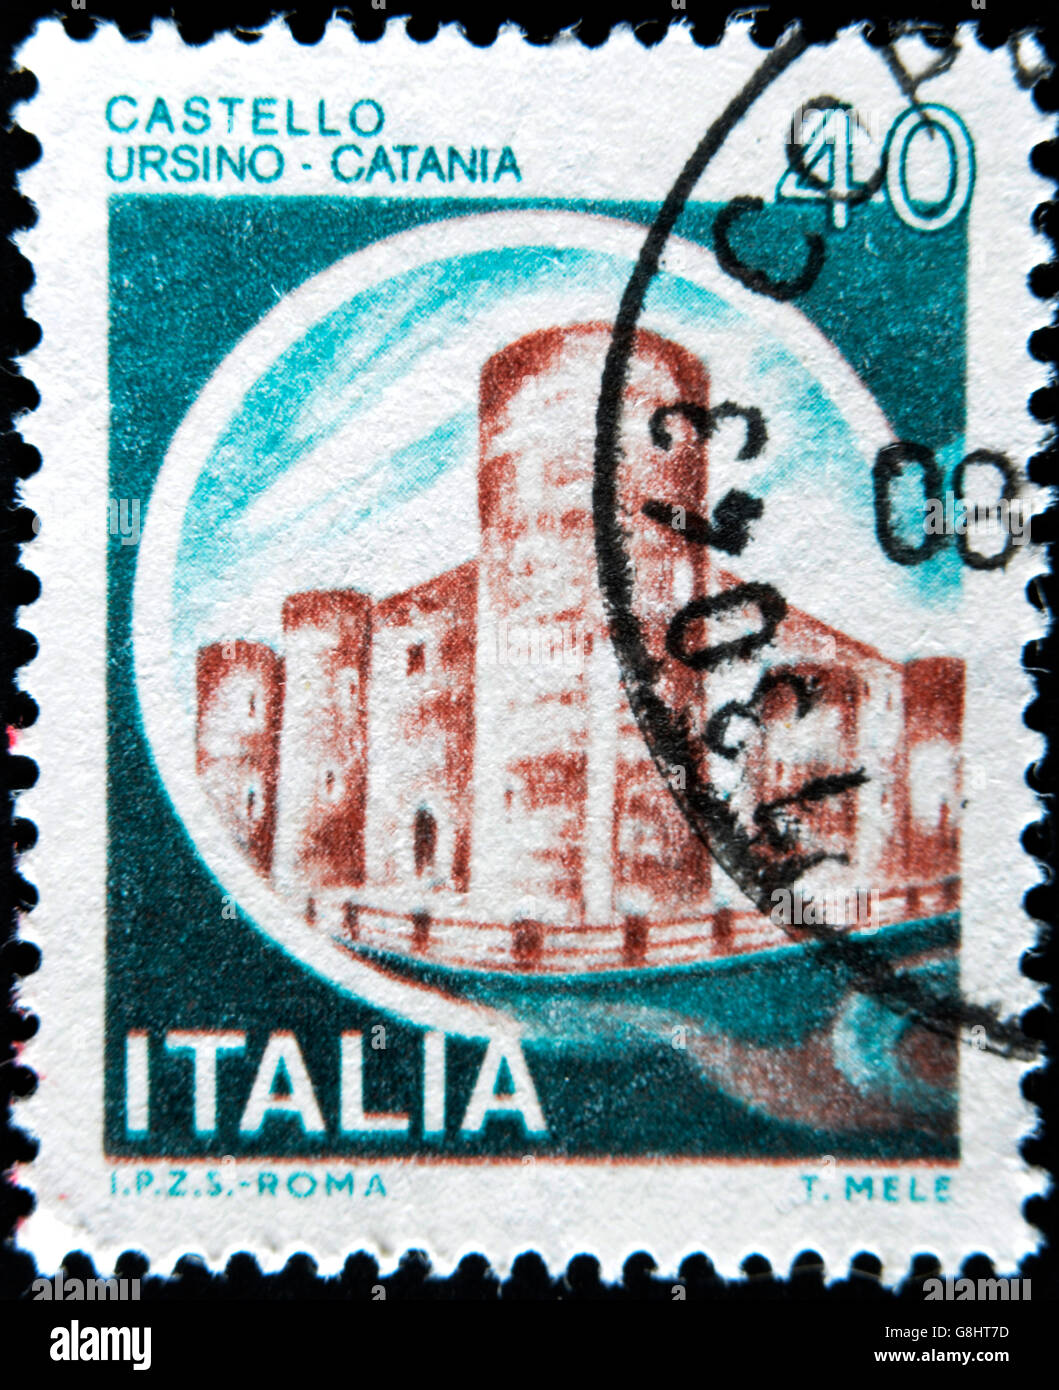 ITALY - CIRCA 1980: A stamp printed in Italy shows castle Ursino, Catania, italian series of castles, circa 1980 Stock Photo